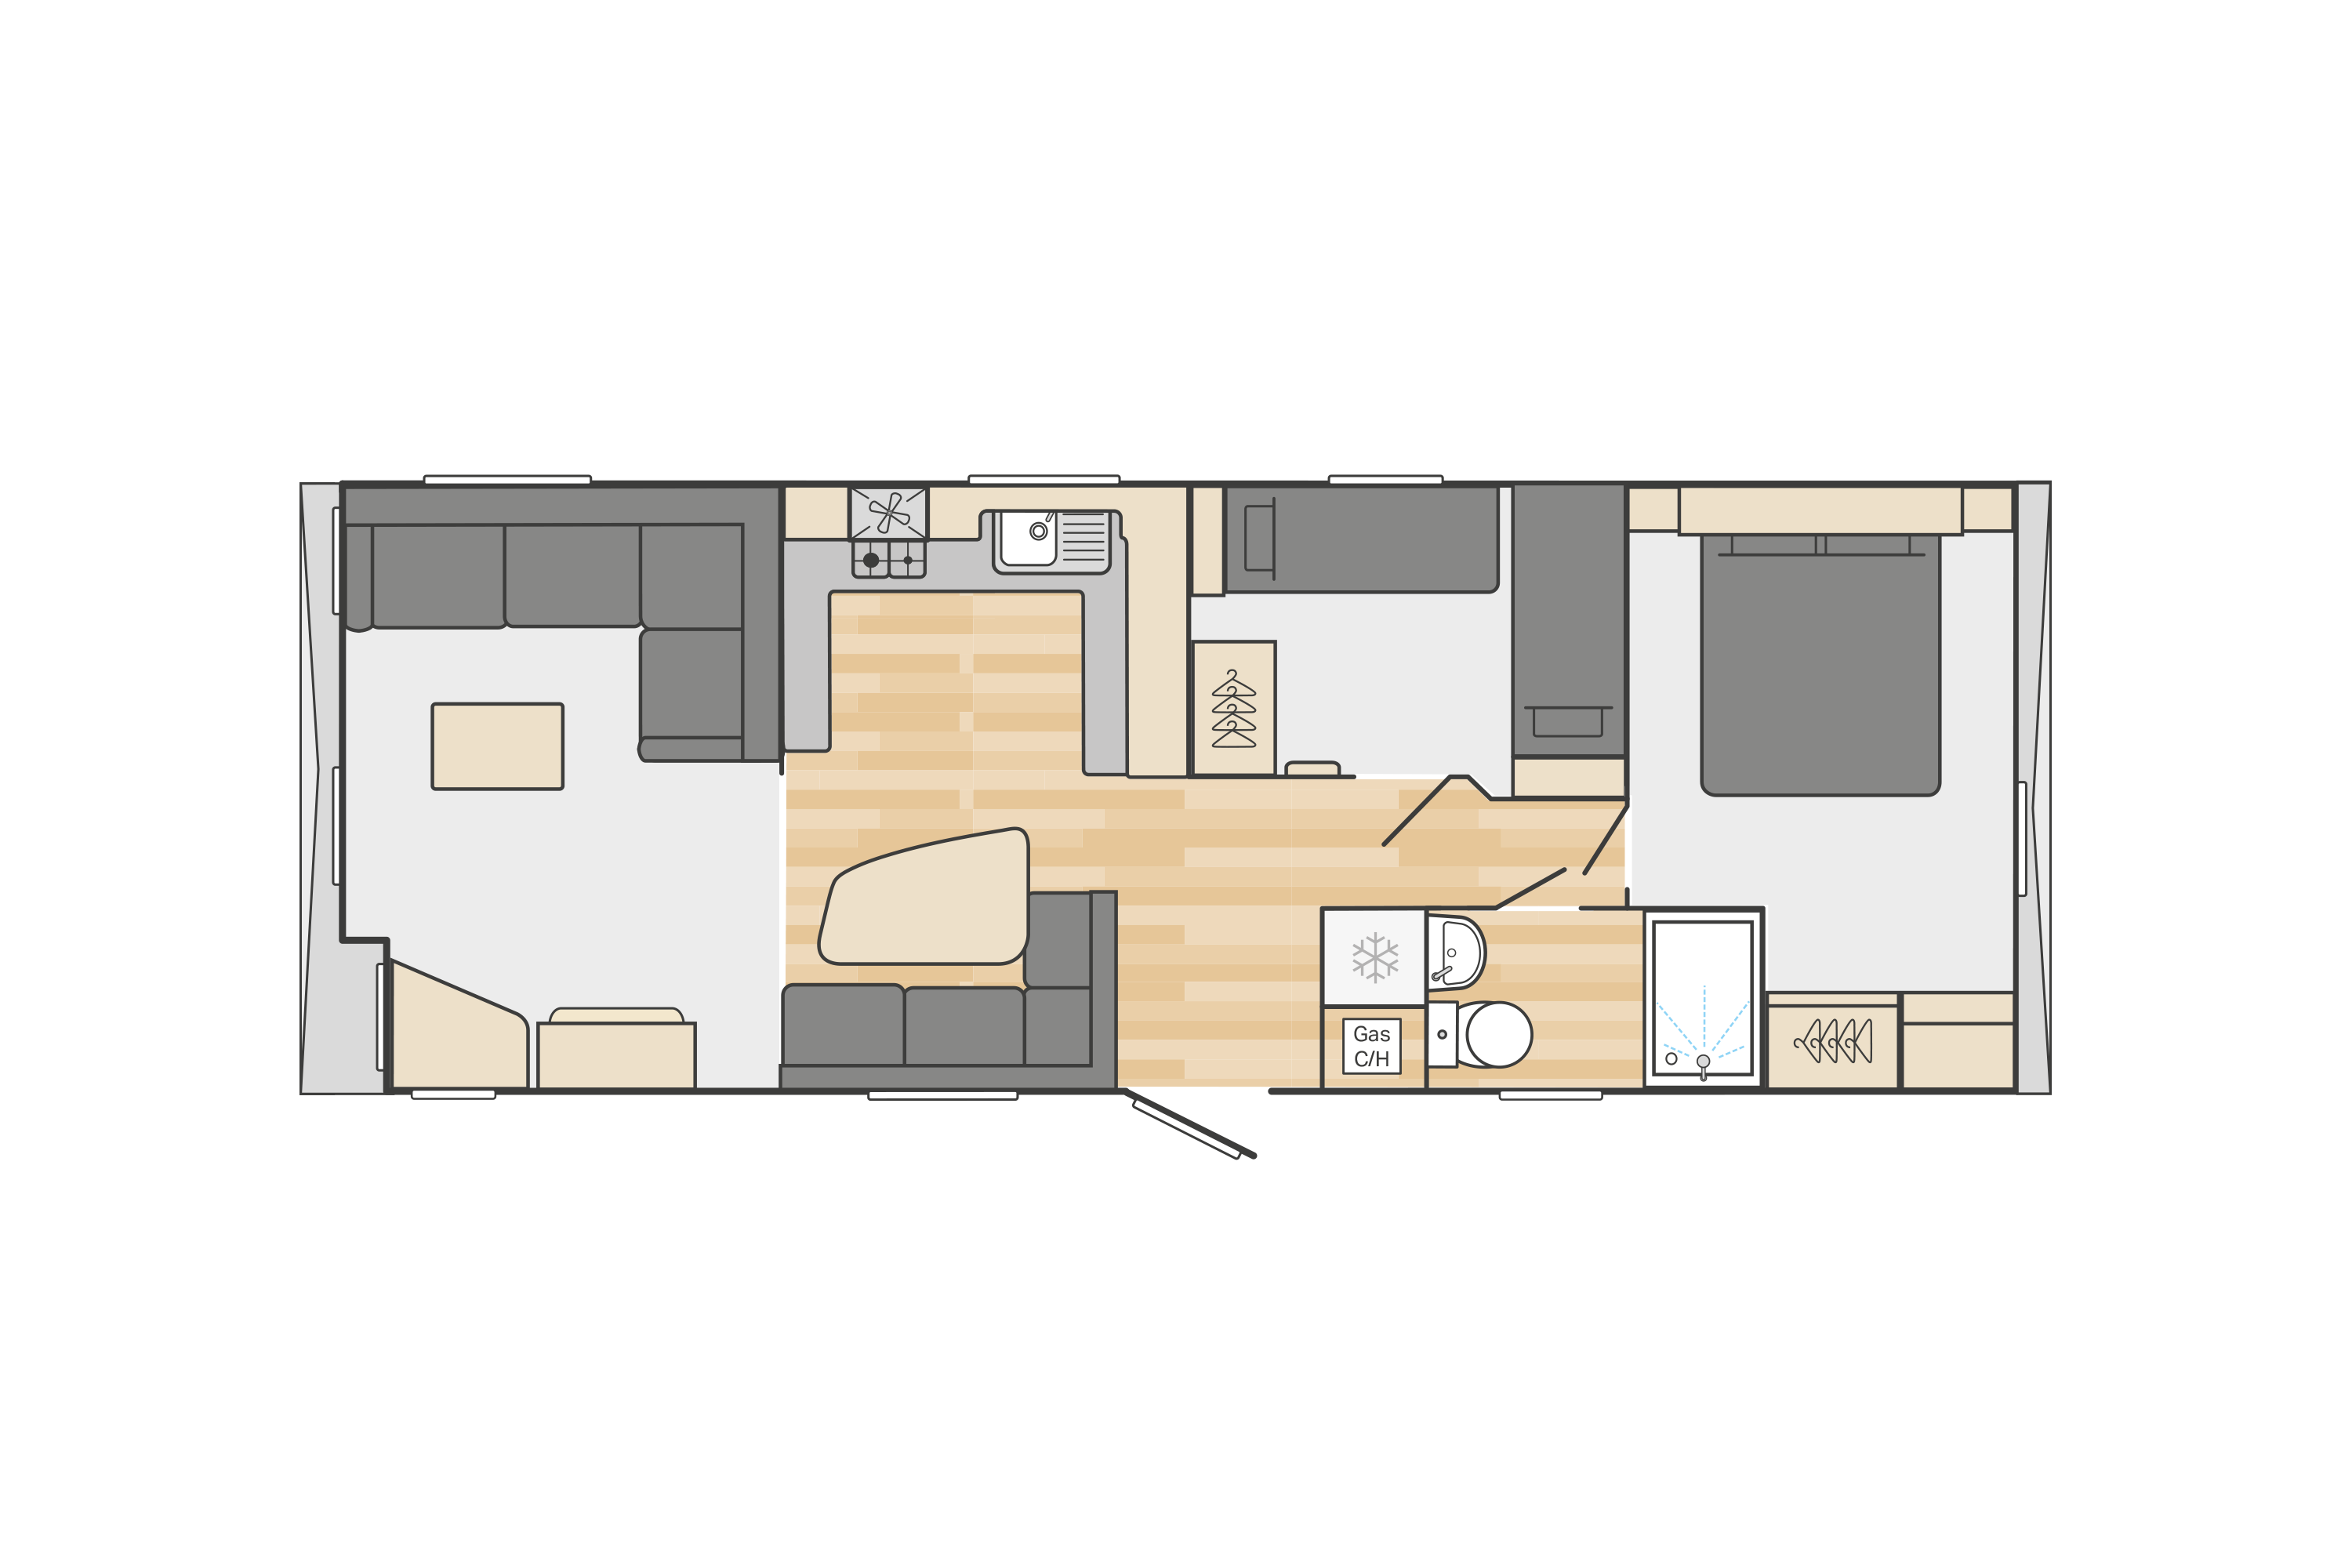 Burgundy 33' x 12' 2 Bedroom floorplan